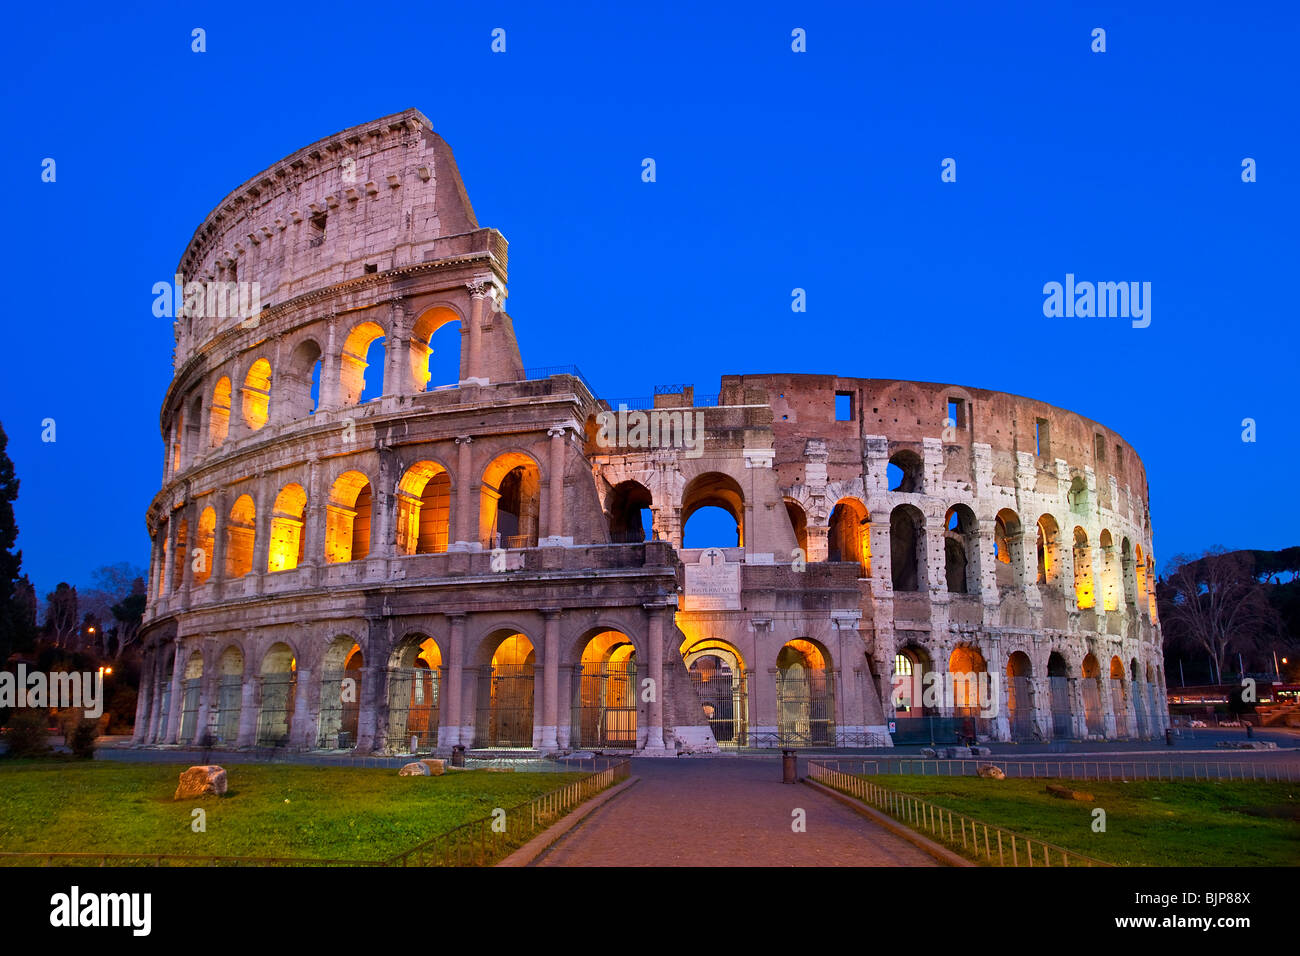 The Coliseum, Rome Stock Photo